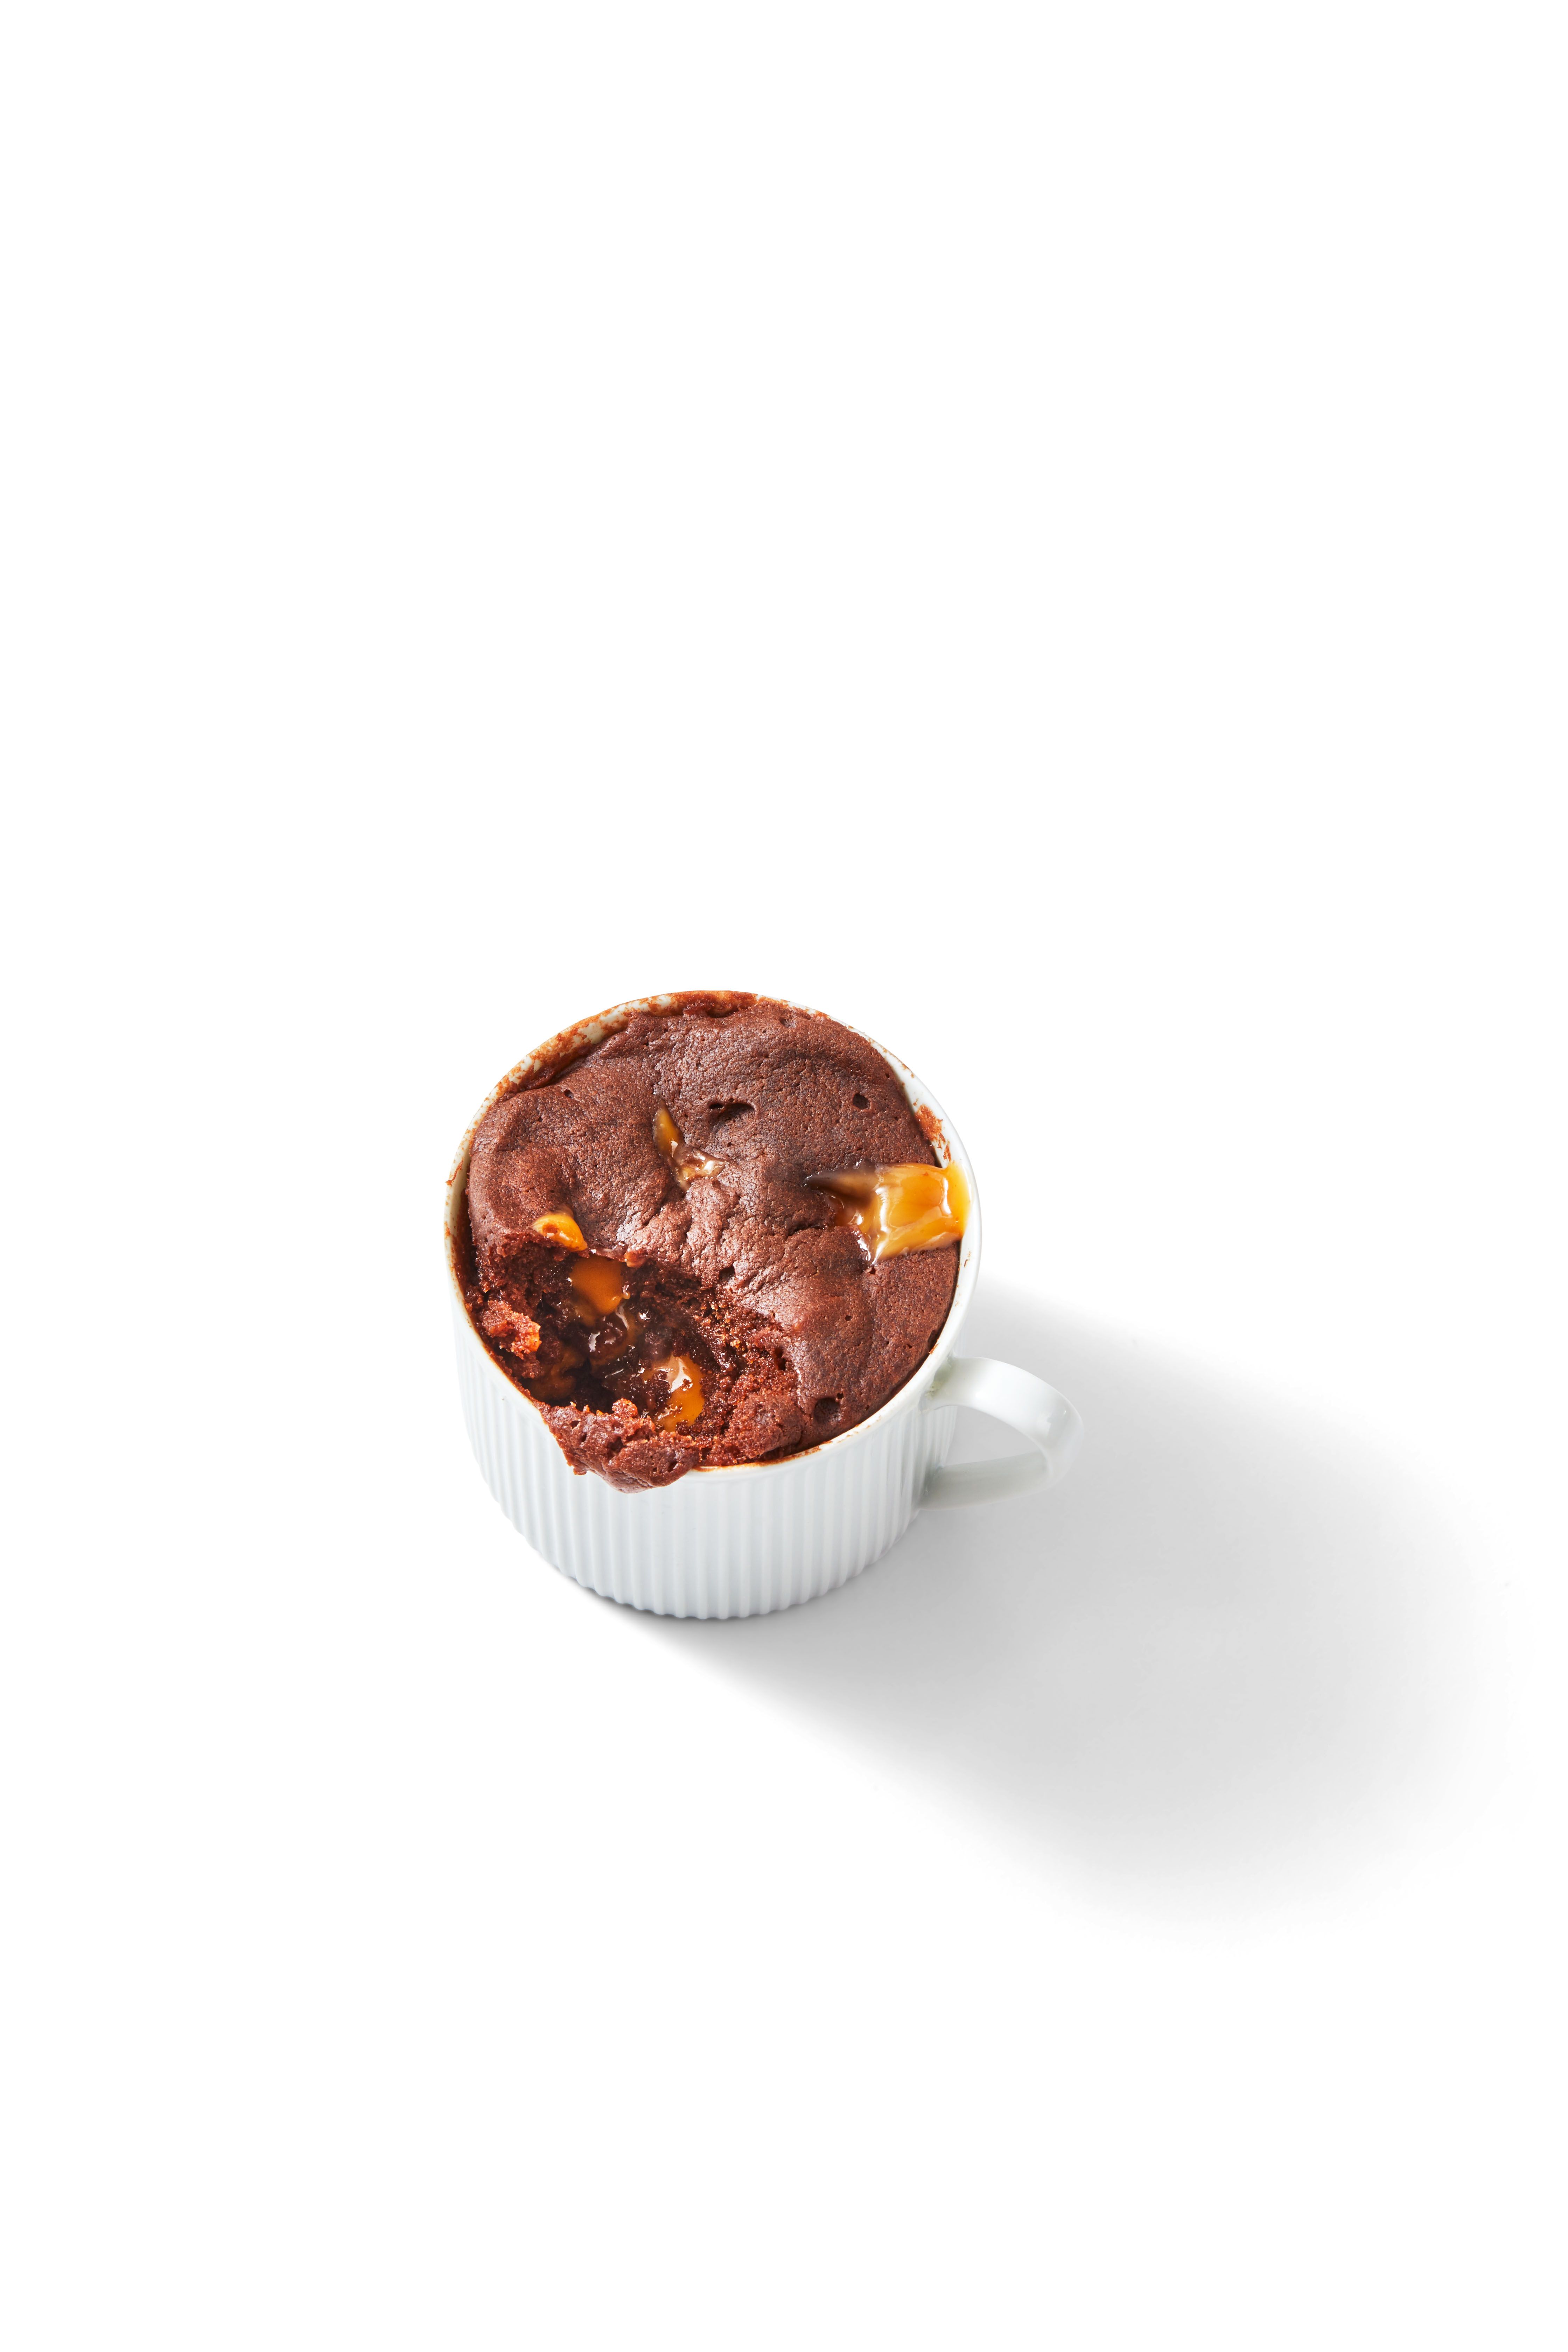 The ultimate microwave mug chocolate cake recipe